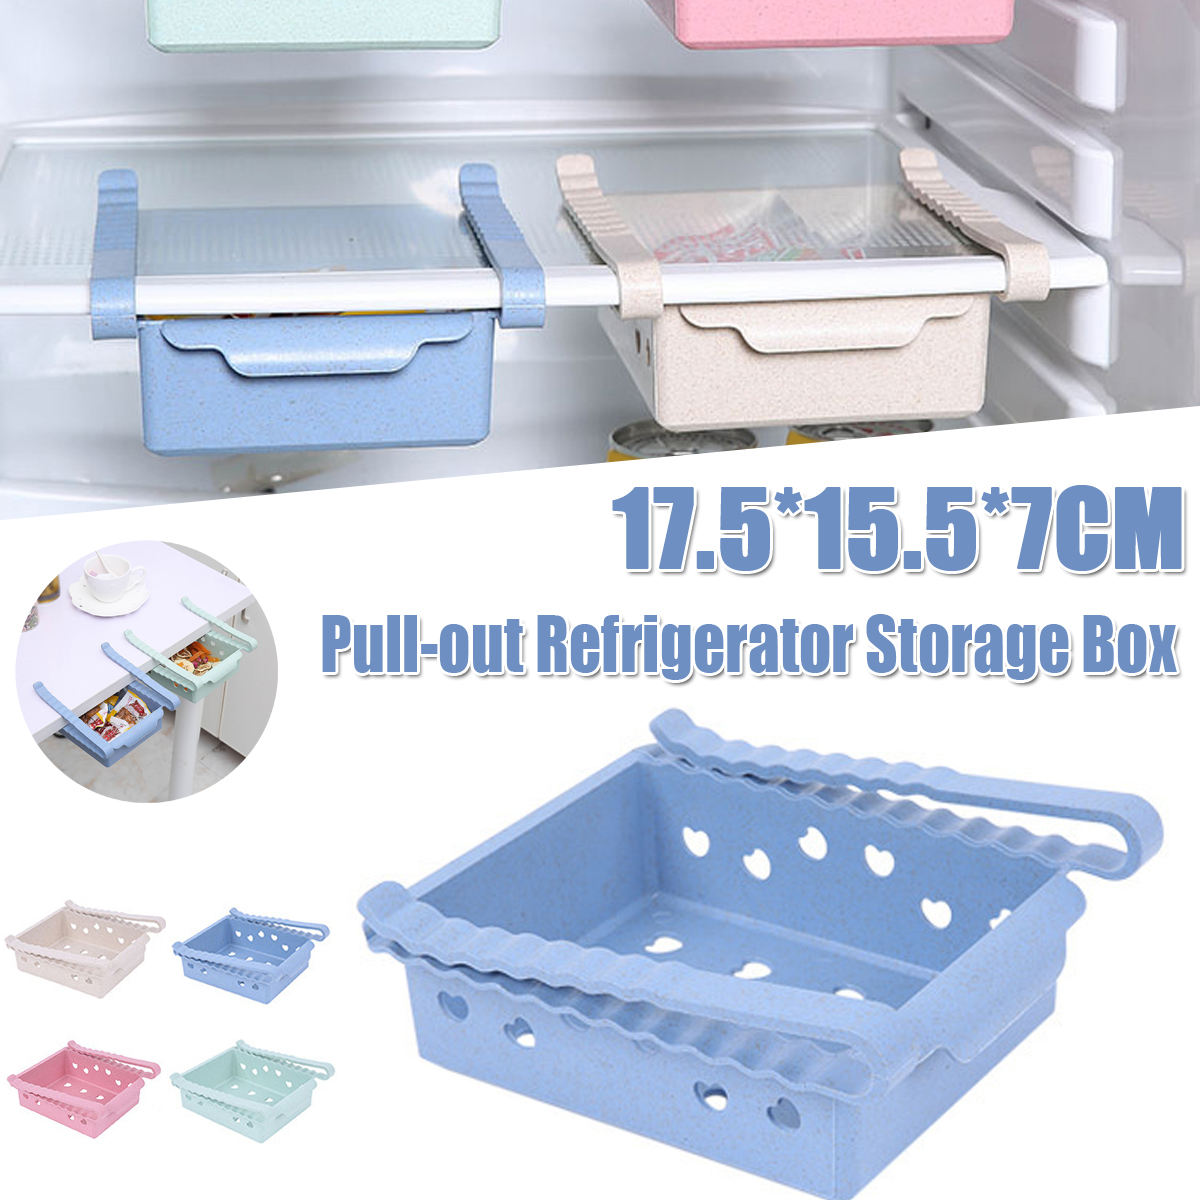 2L-Refrigerator-Storage-Rack-Food-Organizer-Shelf-Box-Pull-out-Drawer-Holder-Camping-Picnic-1668238-1